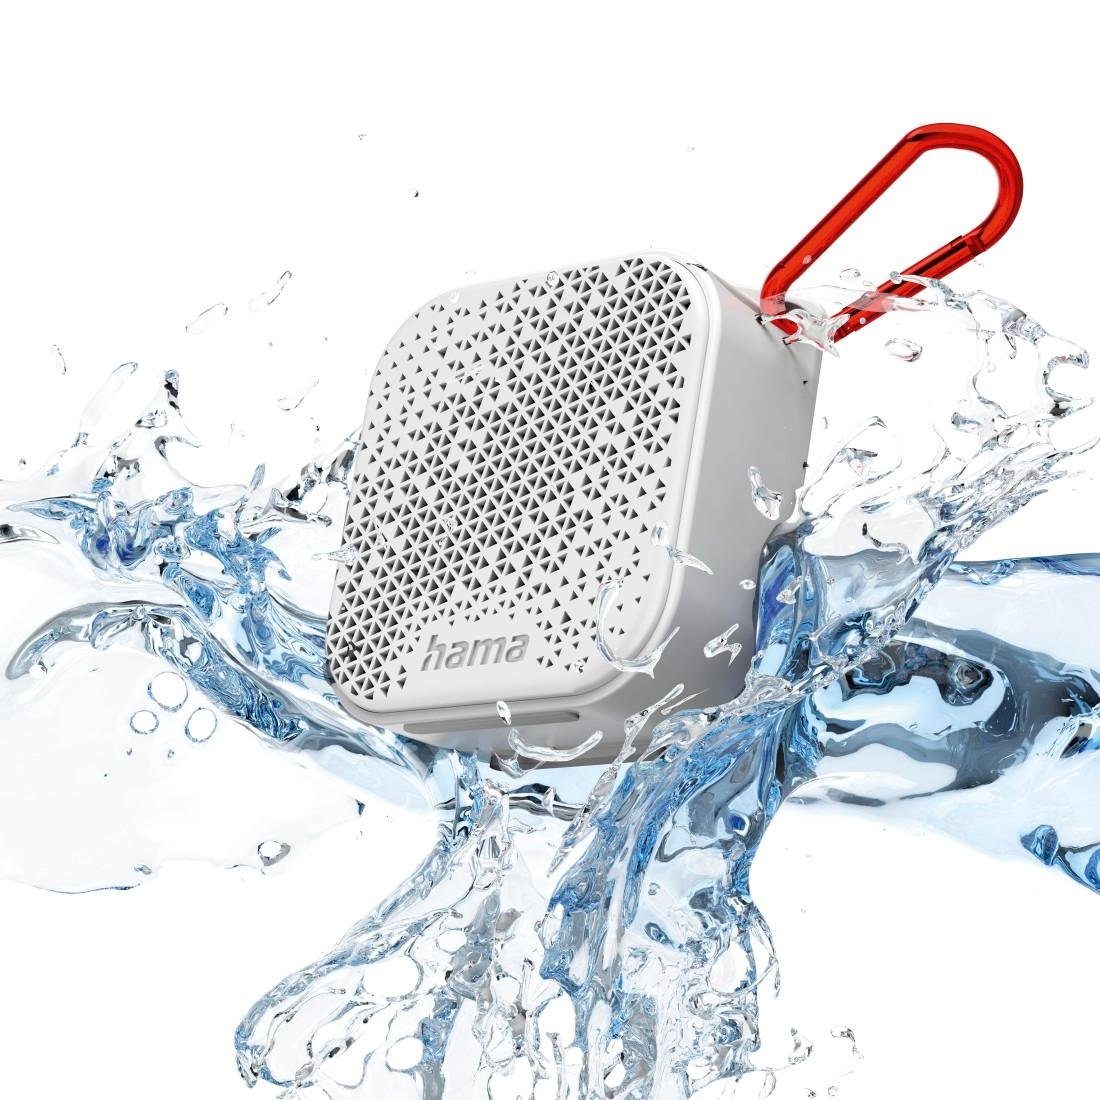 Hama Bluetooth Lautsprecher kabellos wasserdicht IPX7 Outdoor mit Akku Bluetooth-Lautsprecher (3,5 W) weiß | Lautsprecher